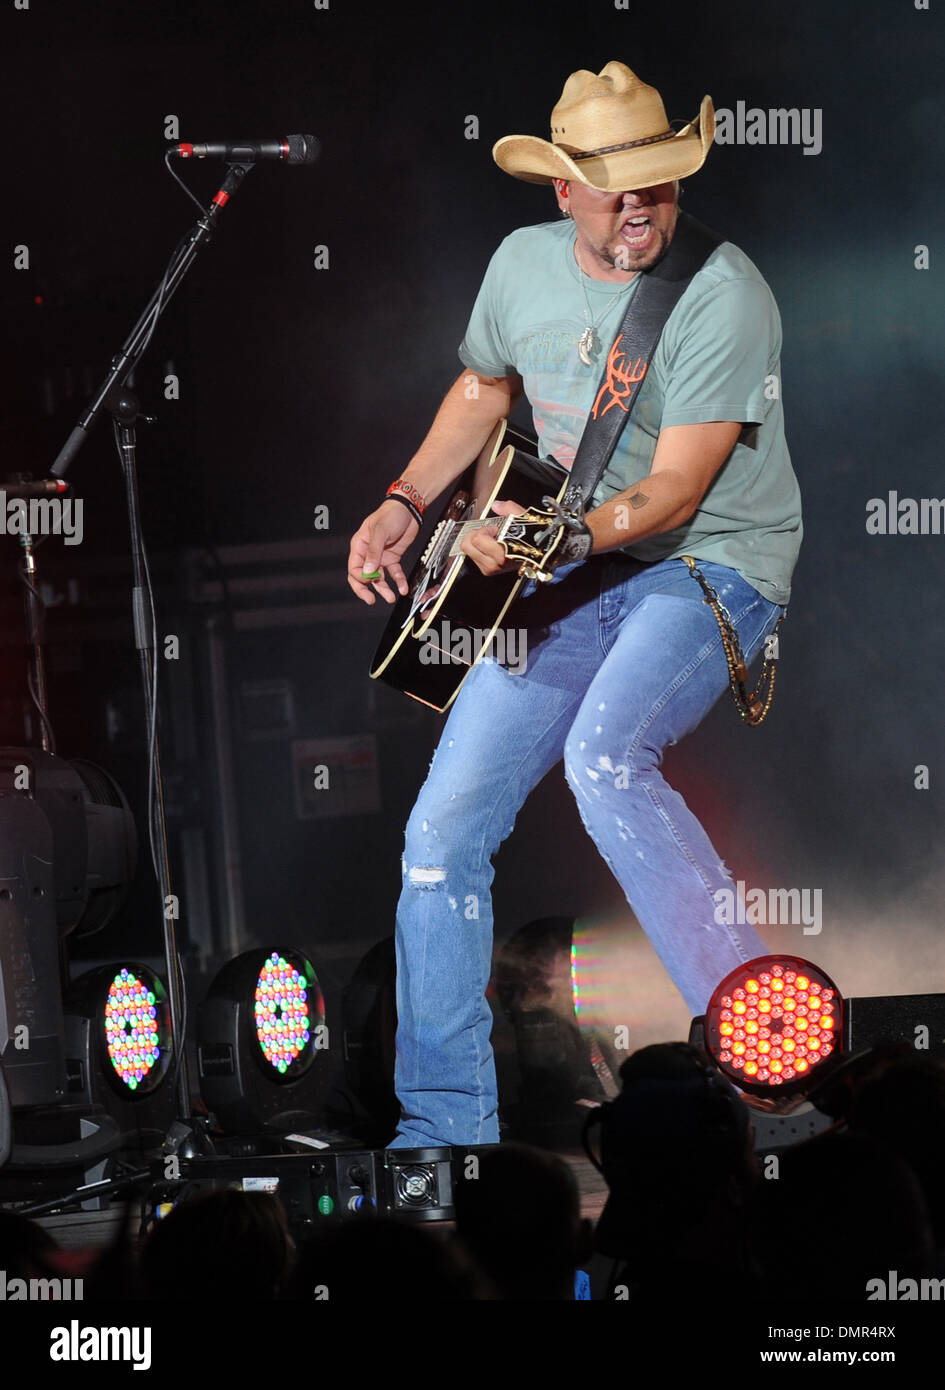 Jason Aldean performing during at My Kinda Party Tour 2012 at Cruzan Amphitheater West Palm Beach Florida - 11.08.12 Stock Photo